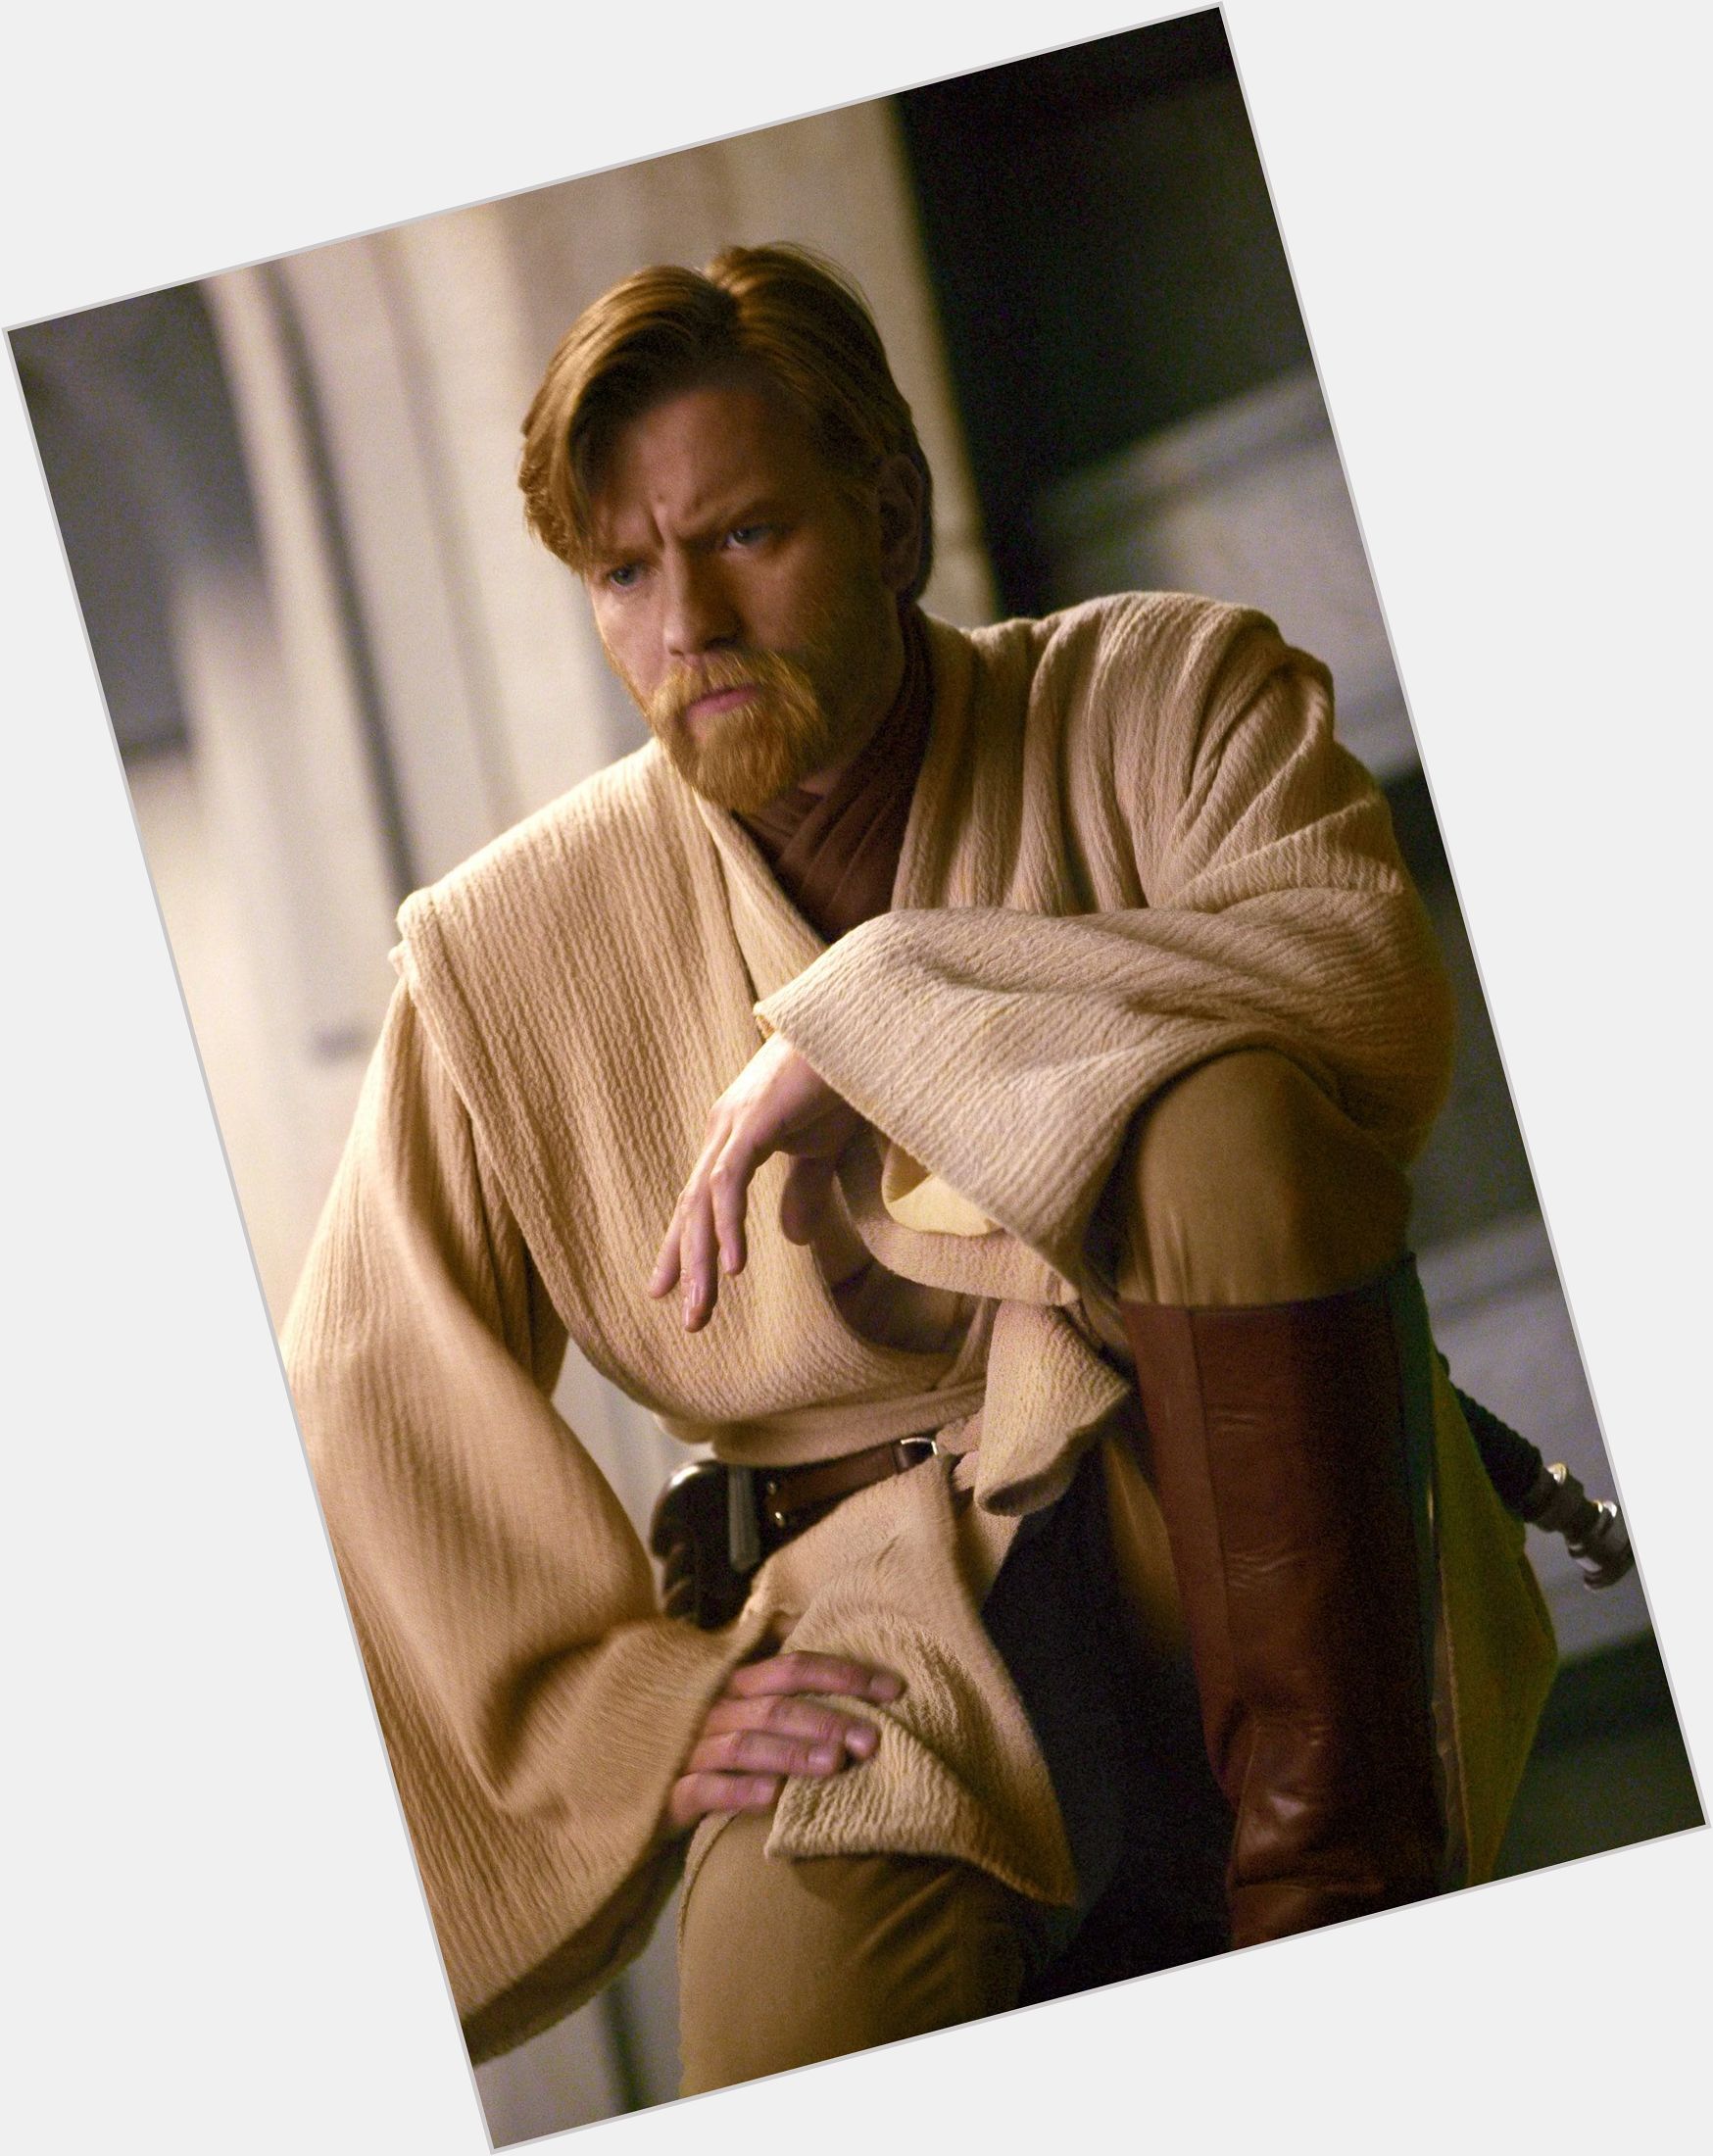 Obi Wan Kenobi shirtless bikini